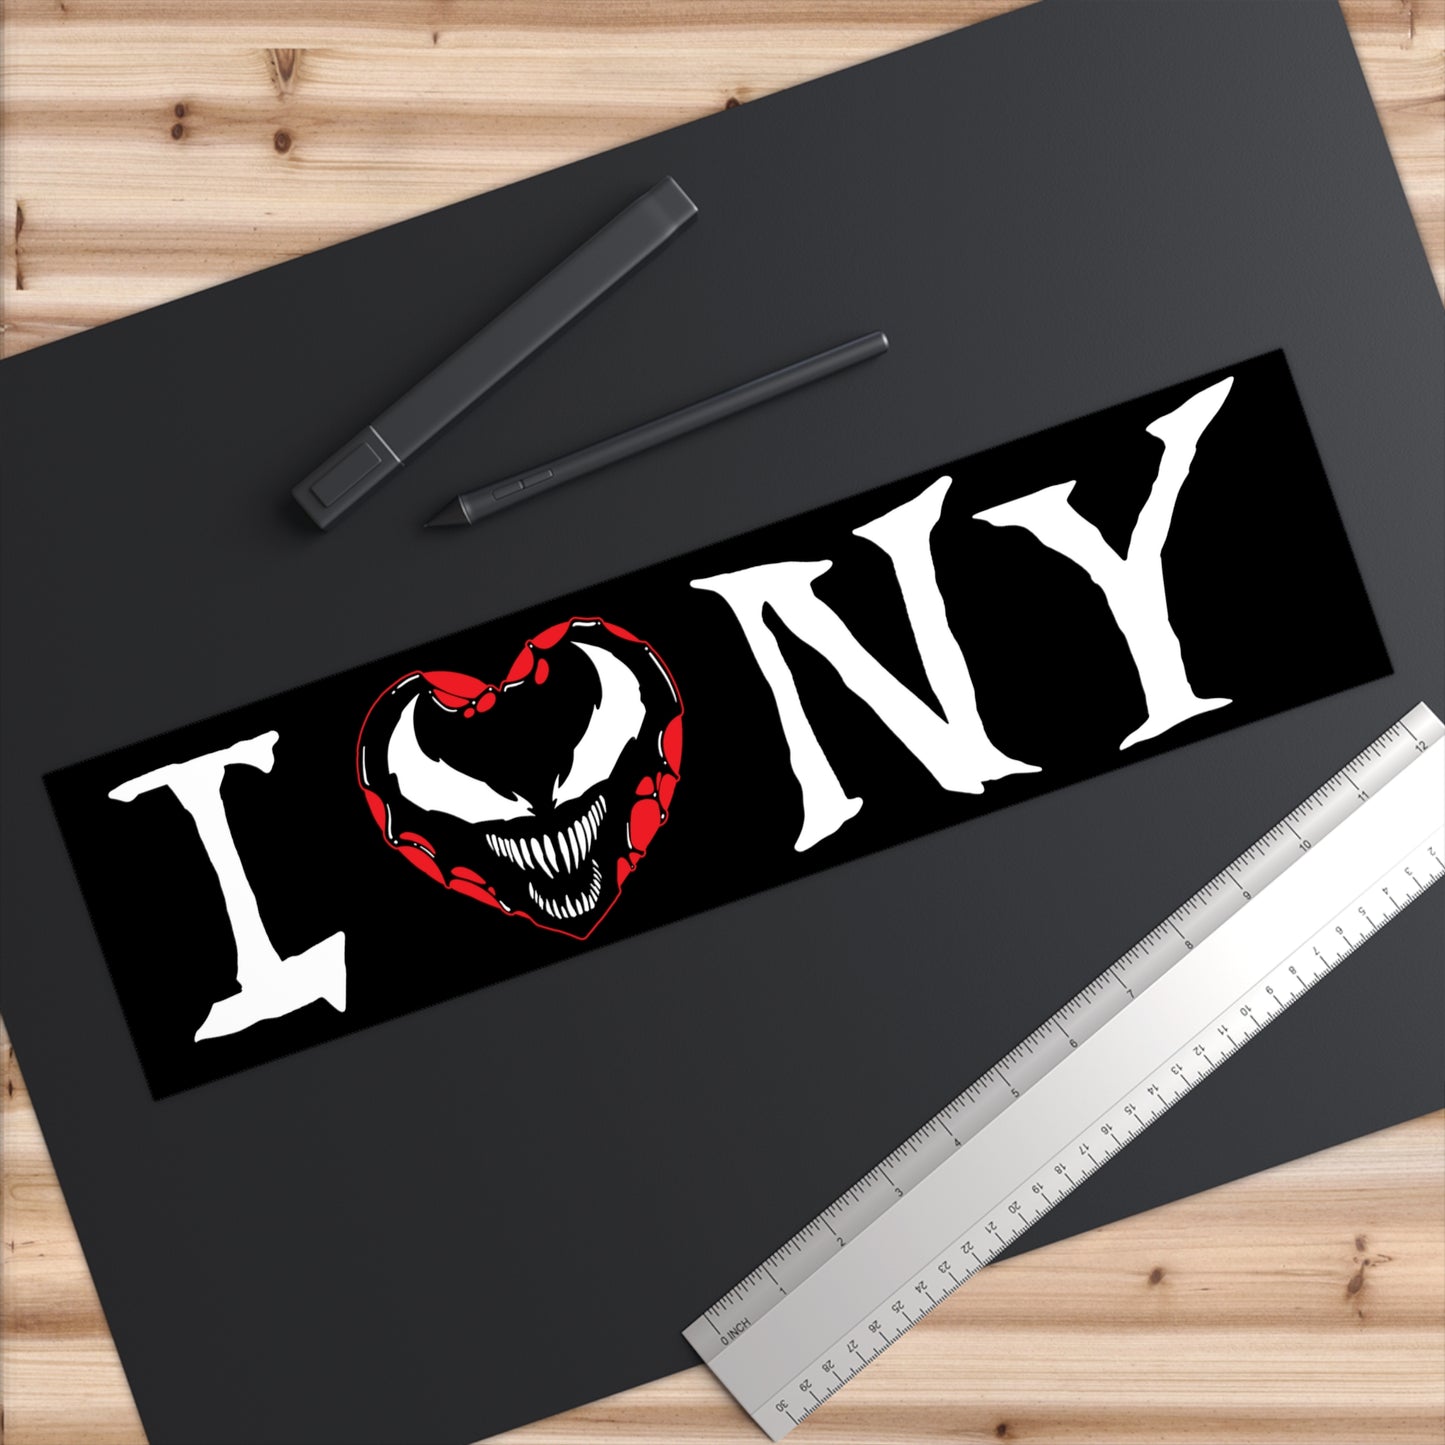 I Symbiote NY bumper sticker